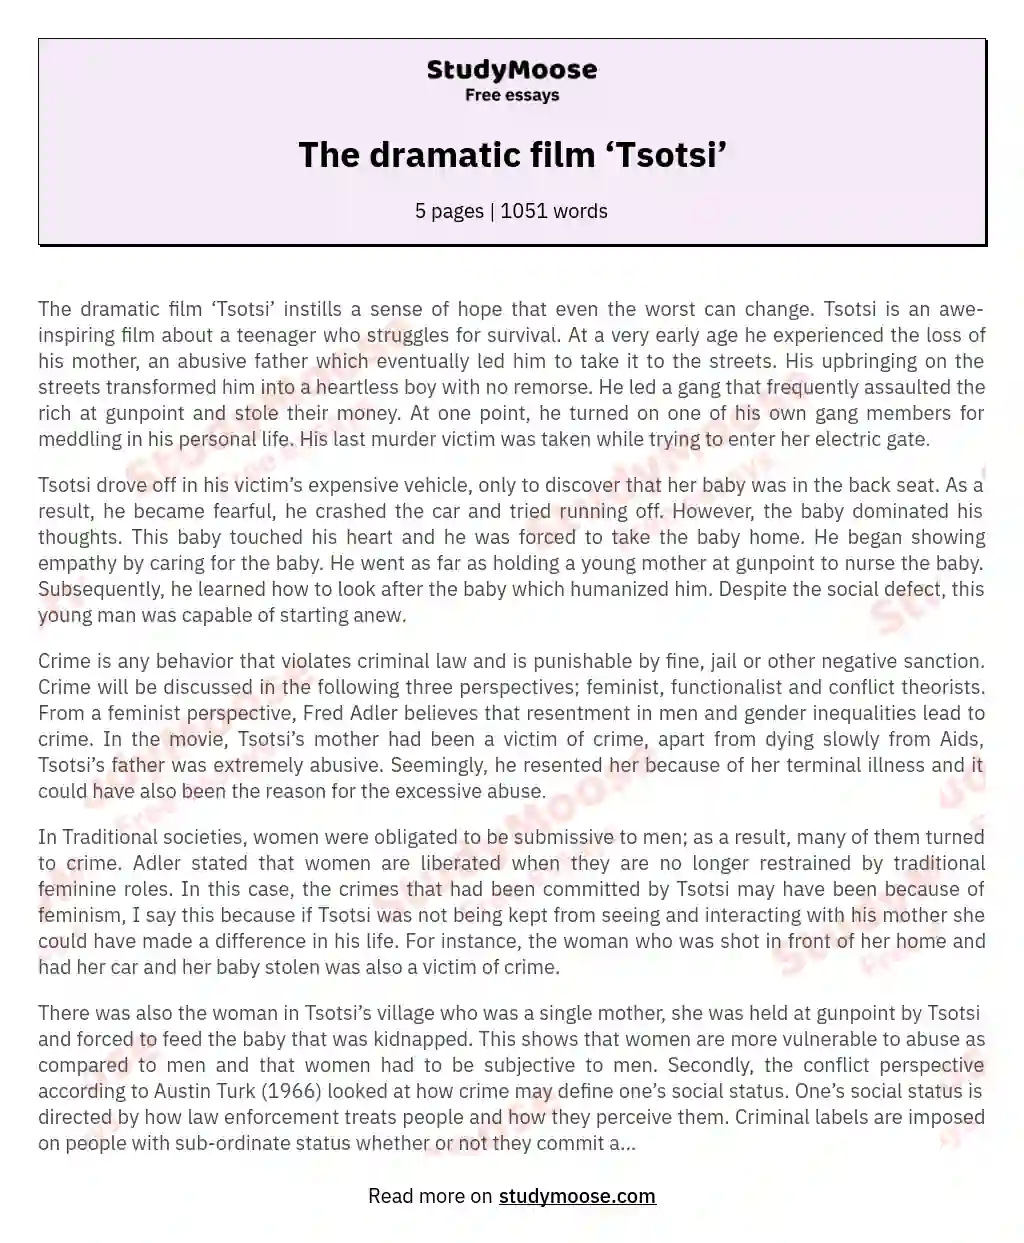 The dramatic film ‘Tsotsi’ essay